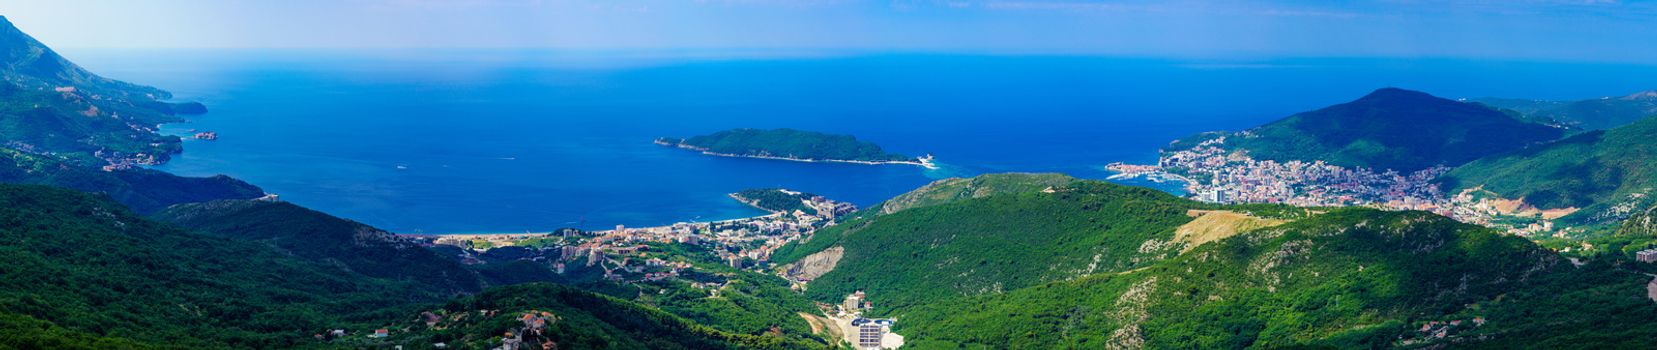 Panoramic view of the Adriatic Sea coast, with Budva, and the Islands Sveti Nikola and Sveti Stefan. Montenegro